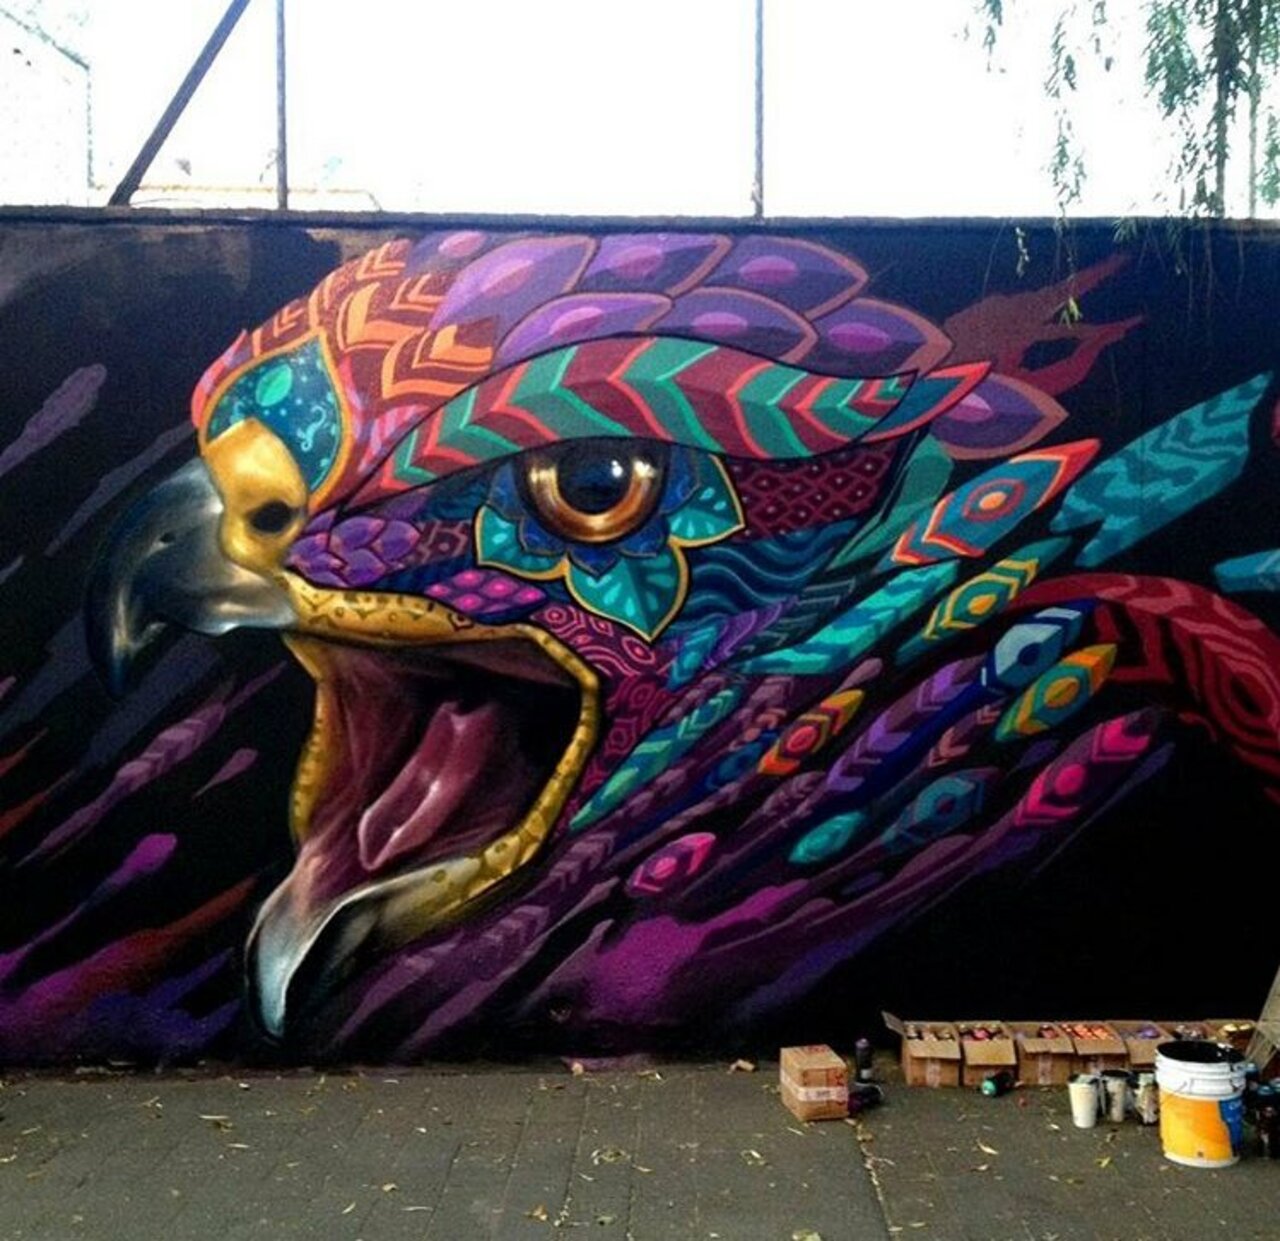 New Farid Rueda Street Art Mexico City 🇲🇽 #art #mural #graffiti #streetart https://t.co/DvQh7Yp8fO